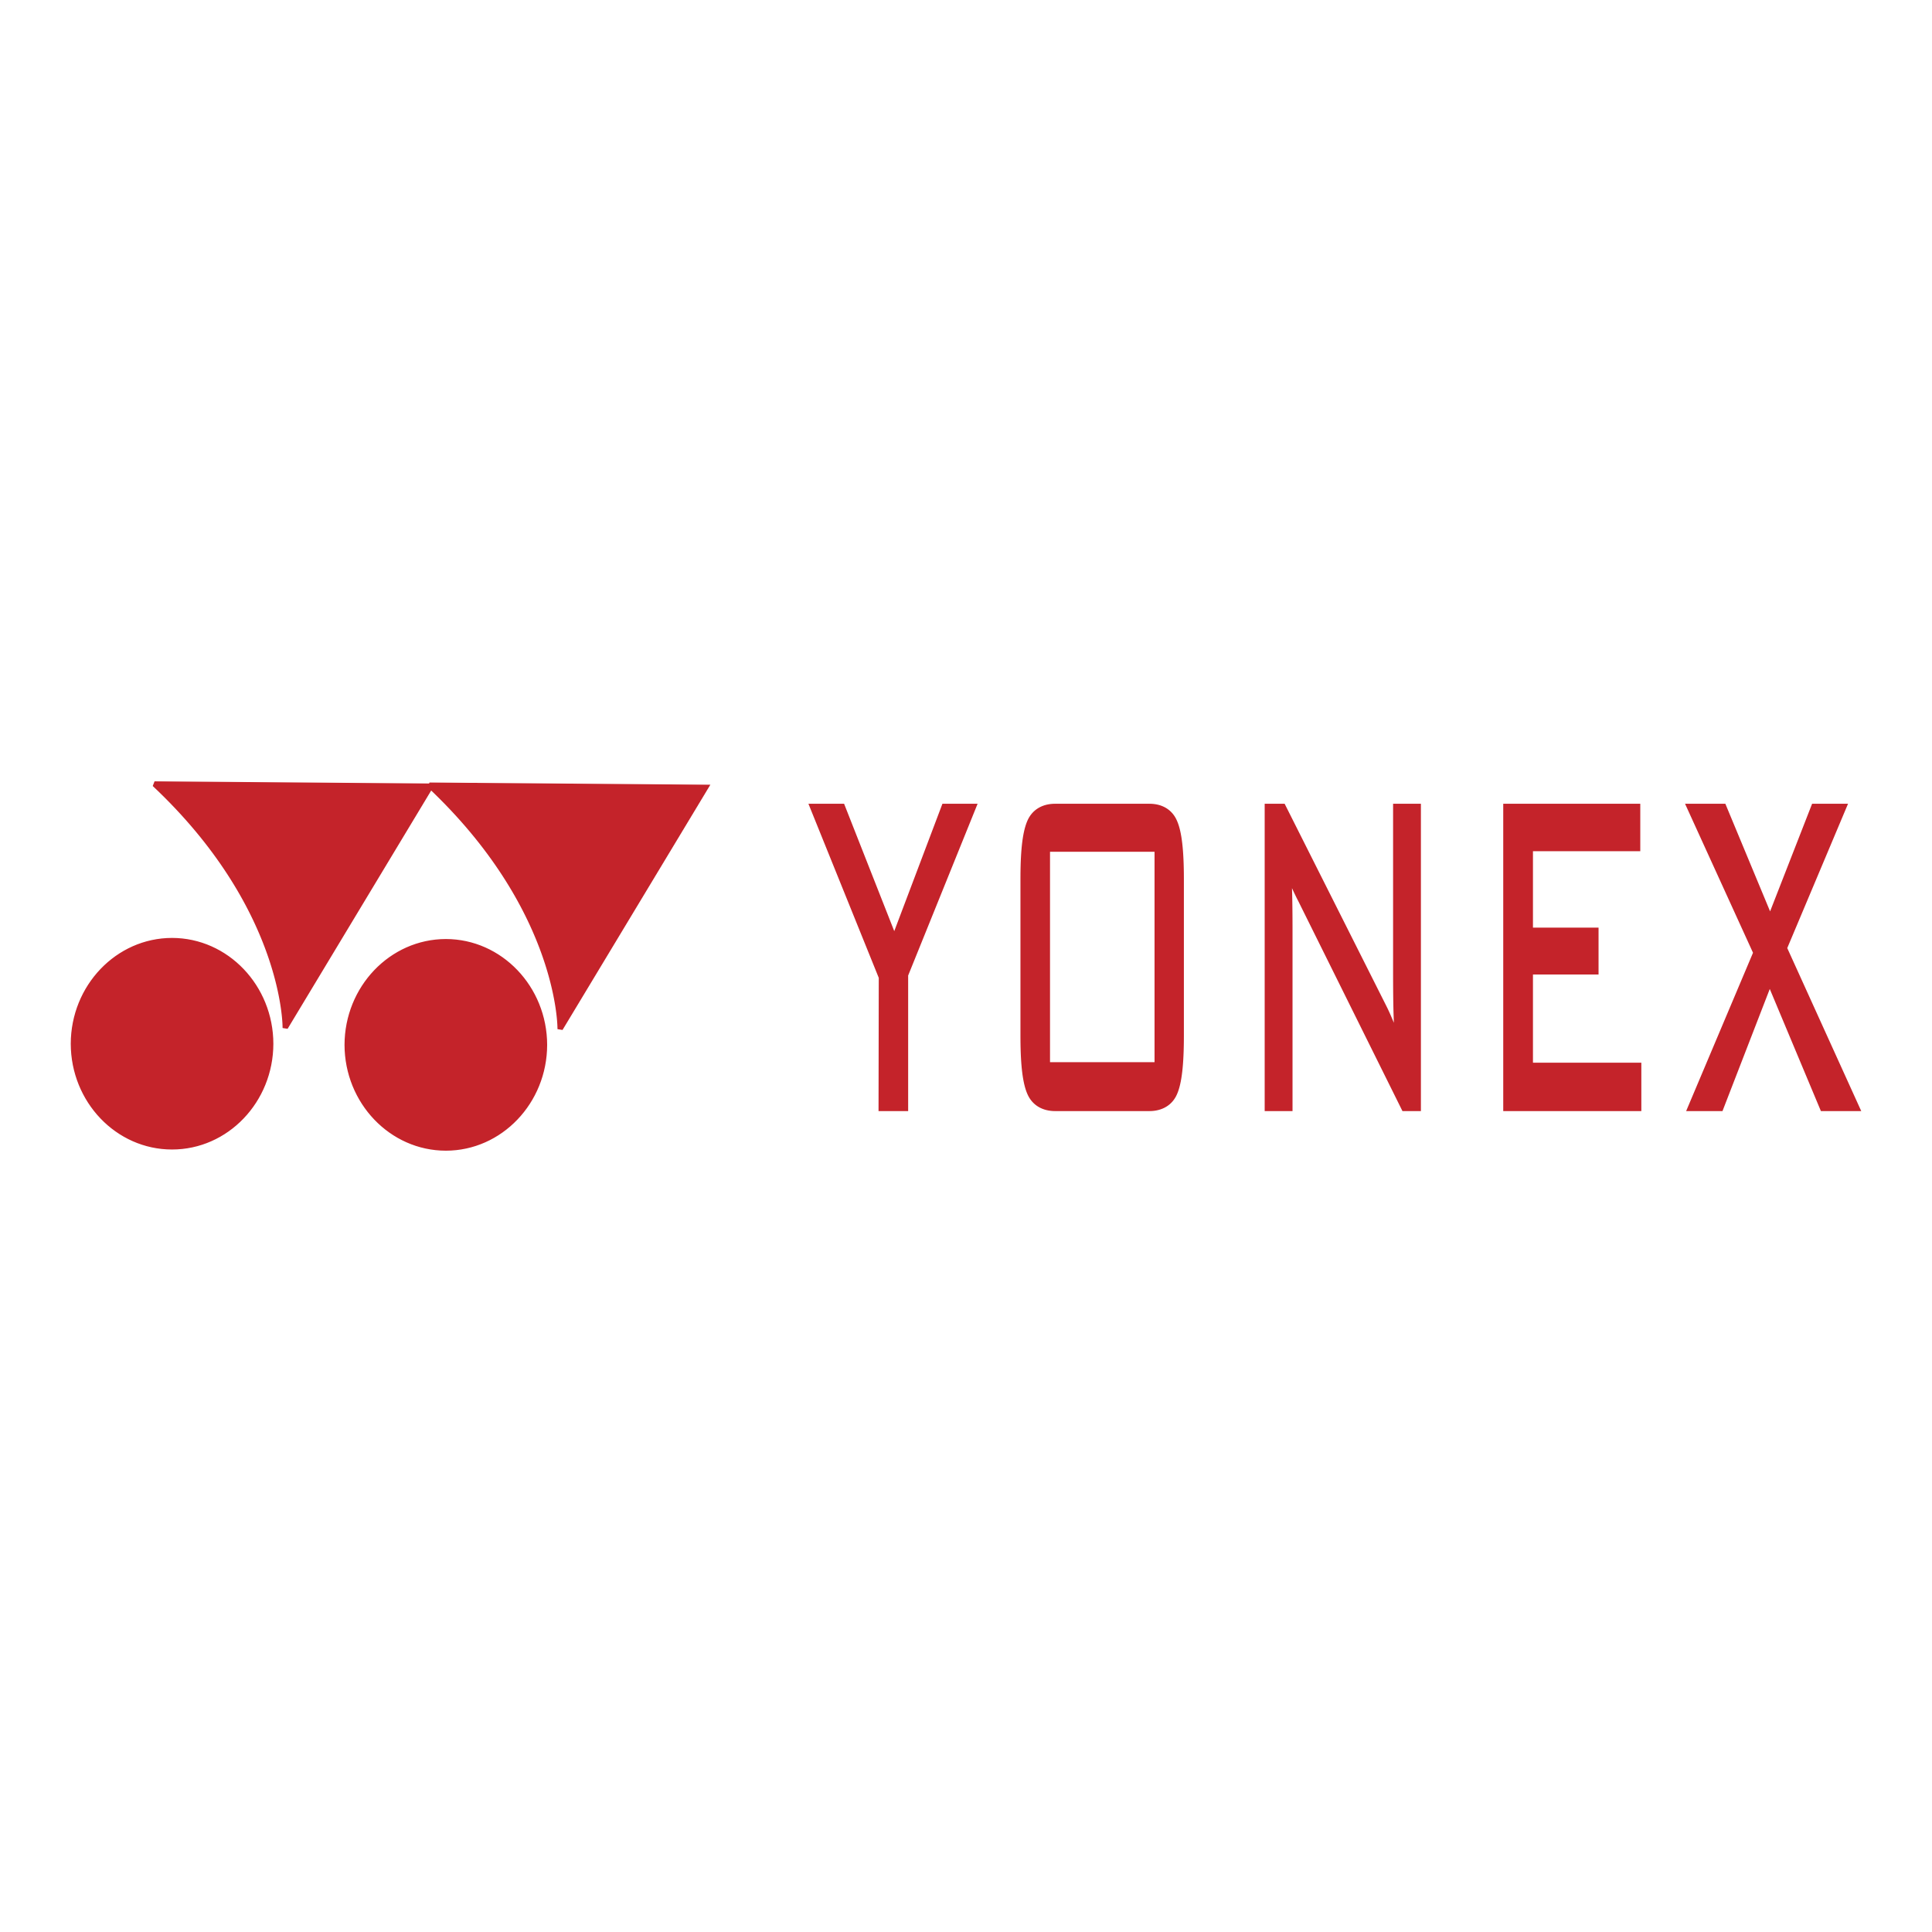 yonex-seeklogo.com